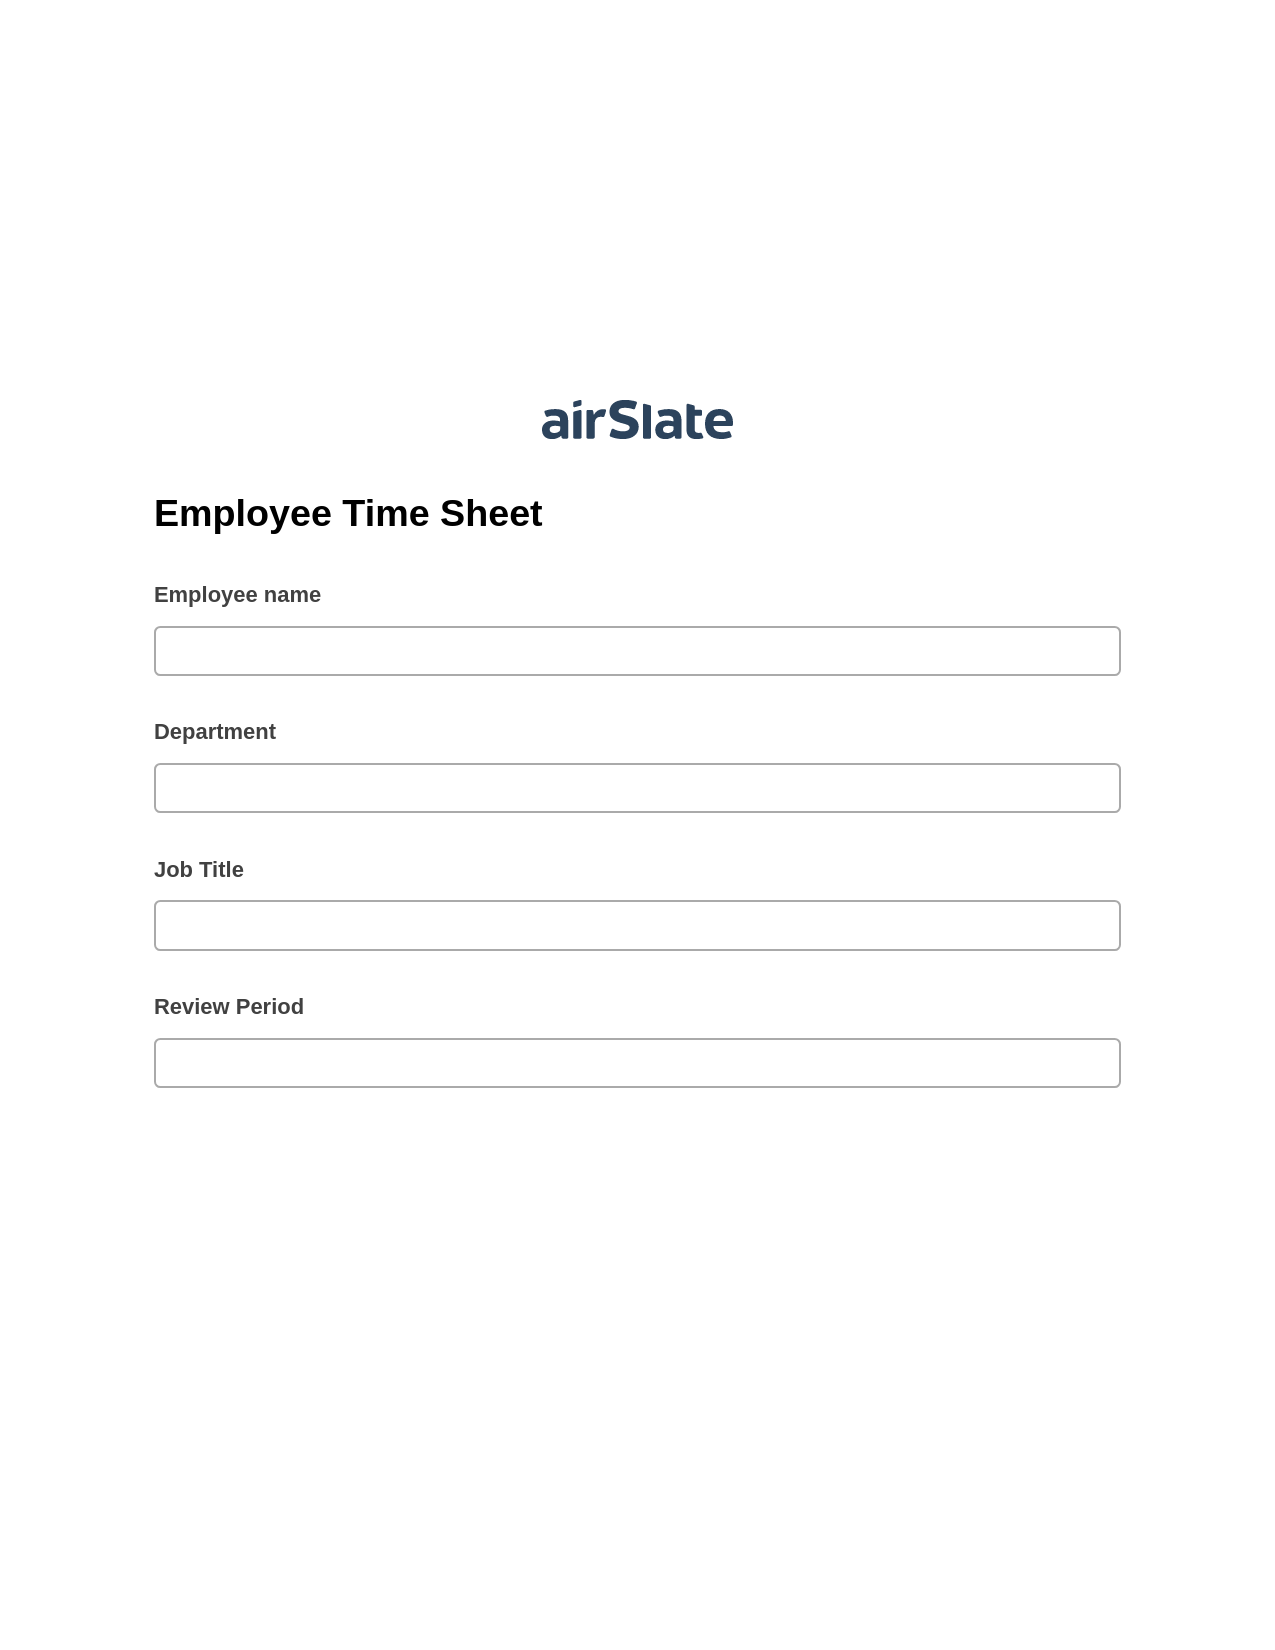 Employee Time Sheet Prefill from NetSuite records, Google Calendar Bot, Archive to SharePoint Folder Bot